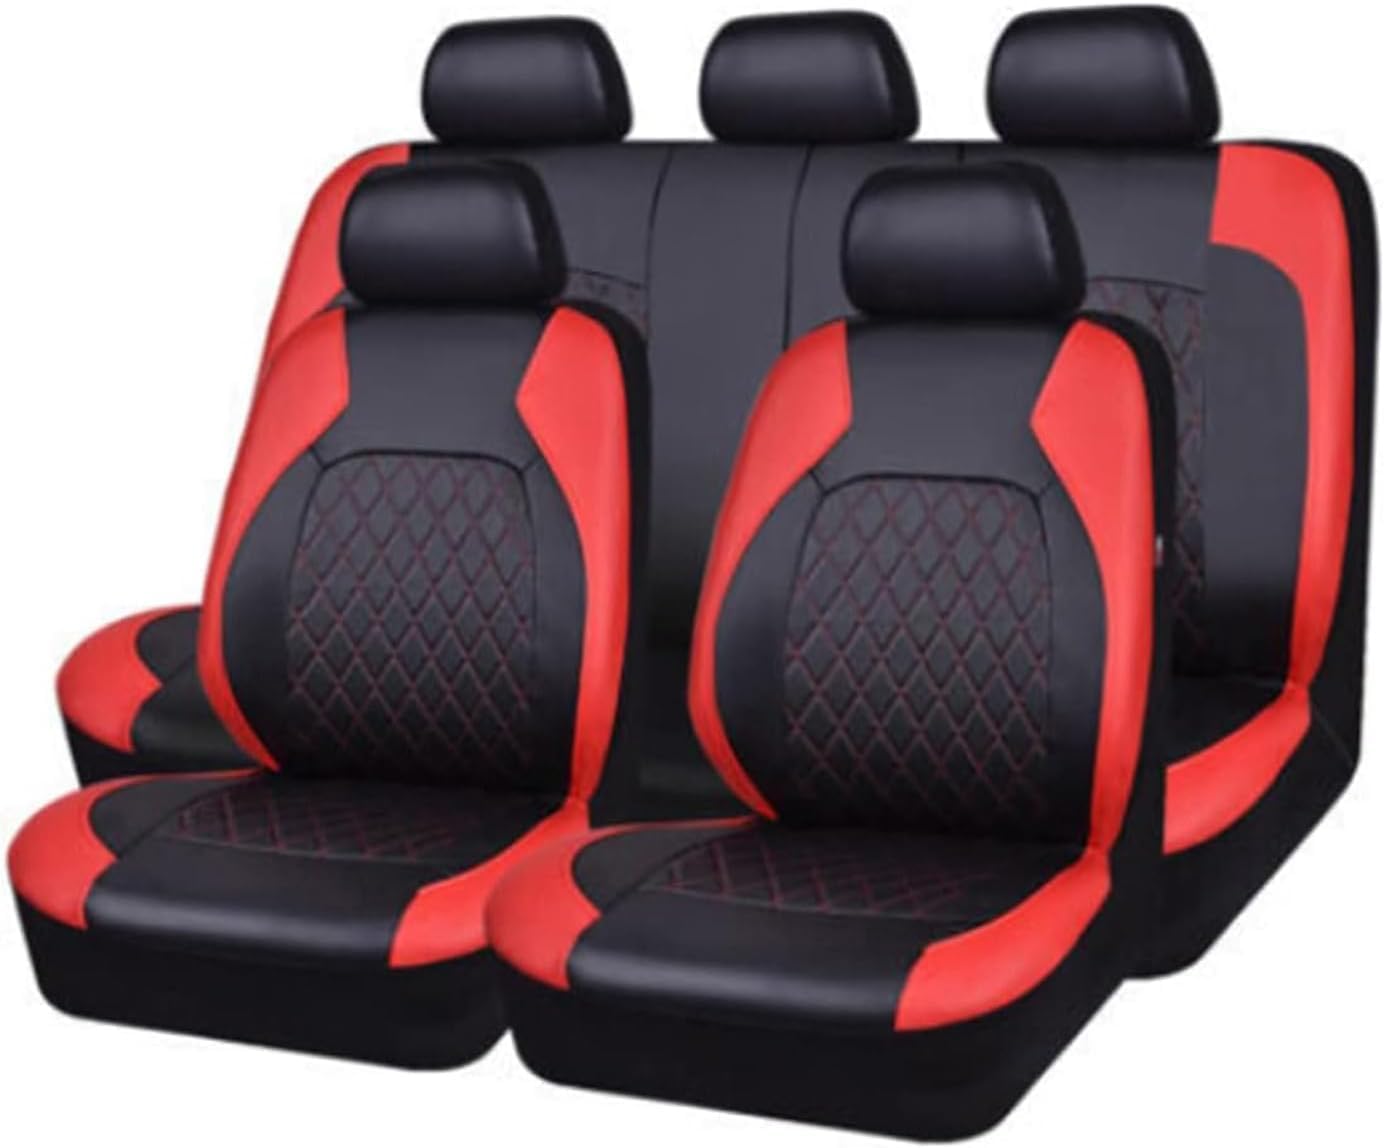 Auto Leder Sitzbezüge für Audi A4 Q3 A6 C5 A4 B8 A3 8P Q2 Q5 A1 A3 A7 A8 Q7 Q5L Sq5 RS, 9 Stück Allwetter Wasserdicht rutschfest Atmungsaktiv Schonbezug Set Sitzkissenschutz,C-Red von LEMAS